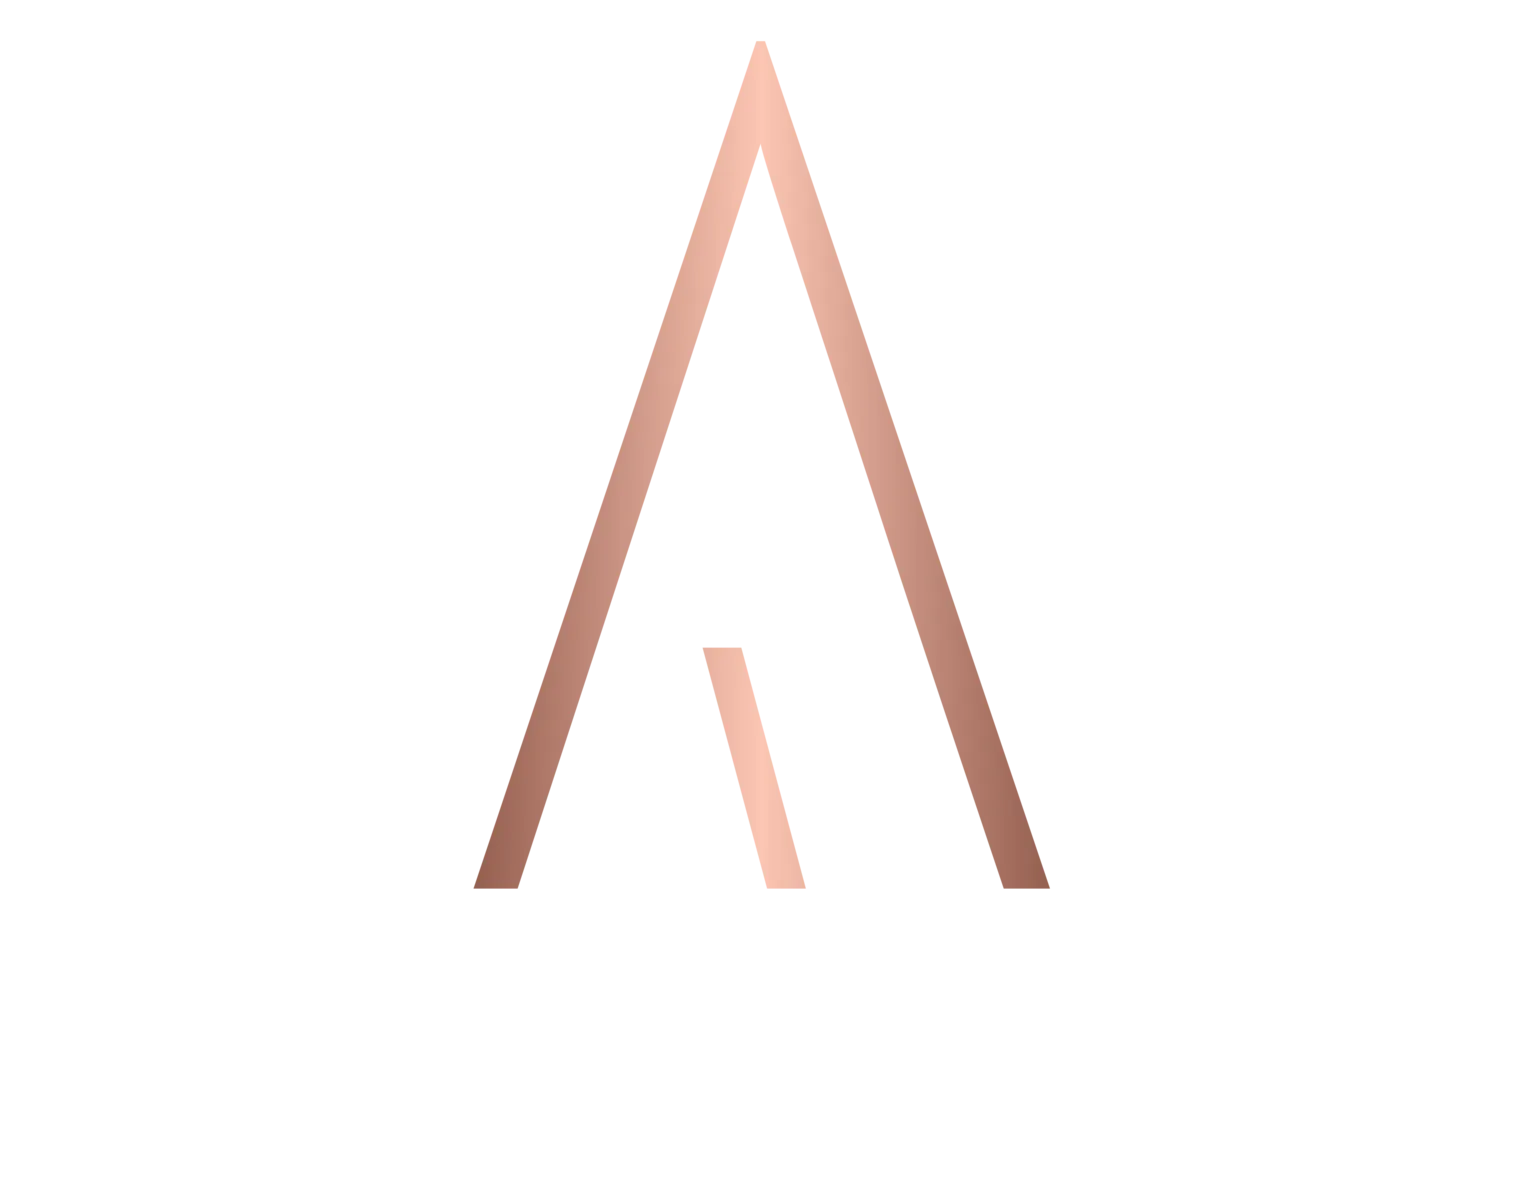 AquAIR Wealth